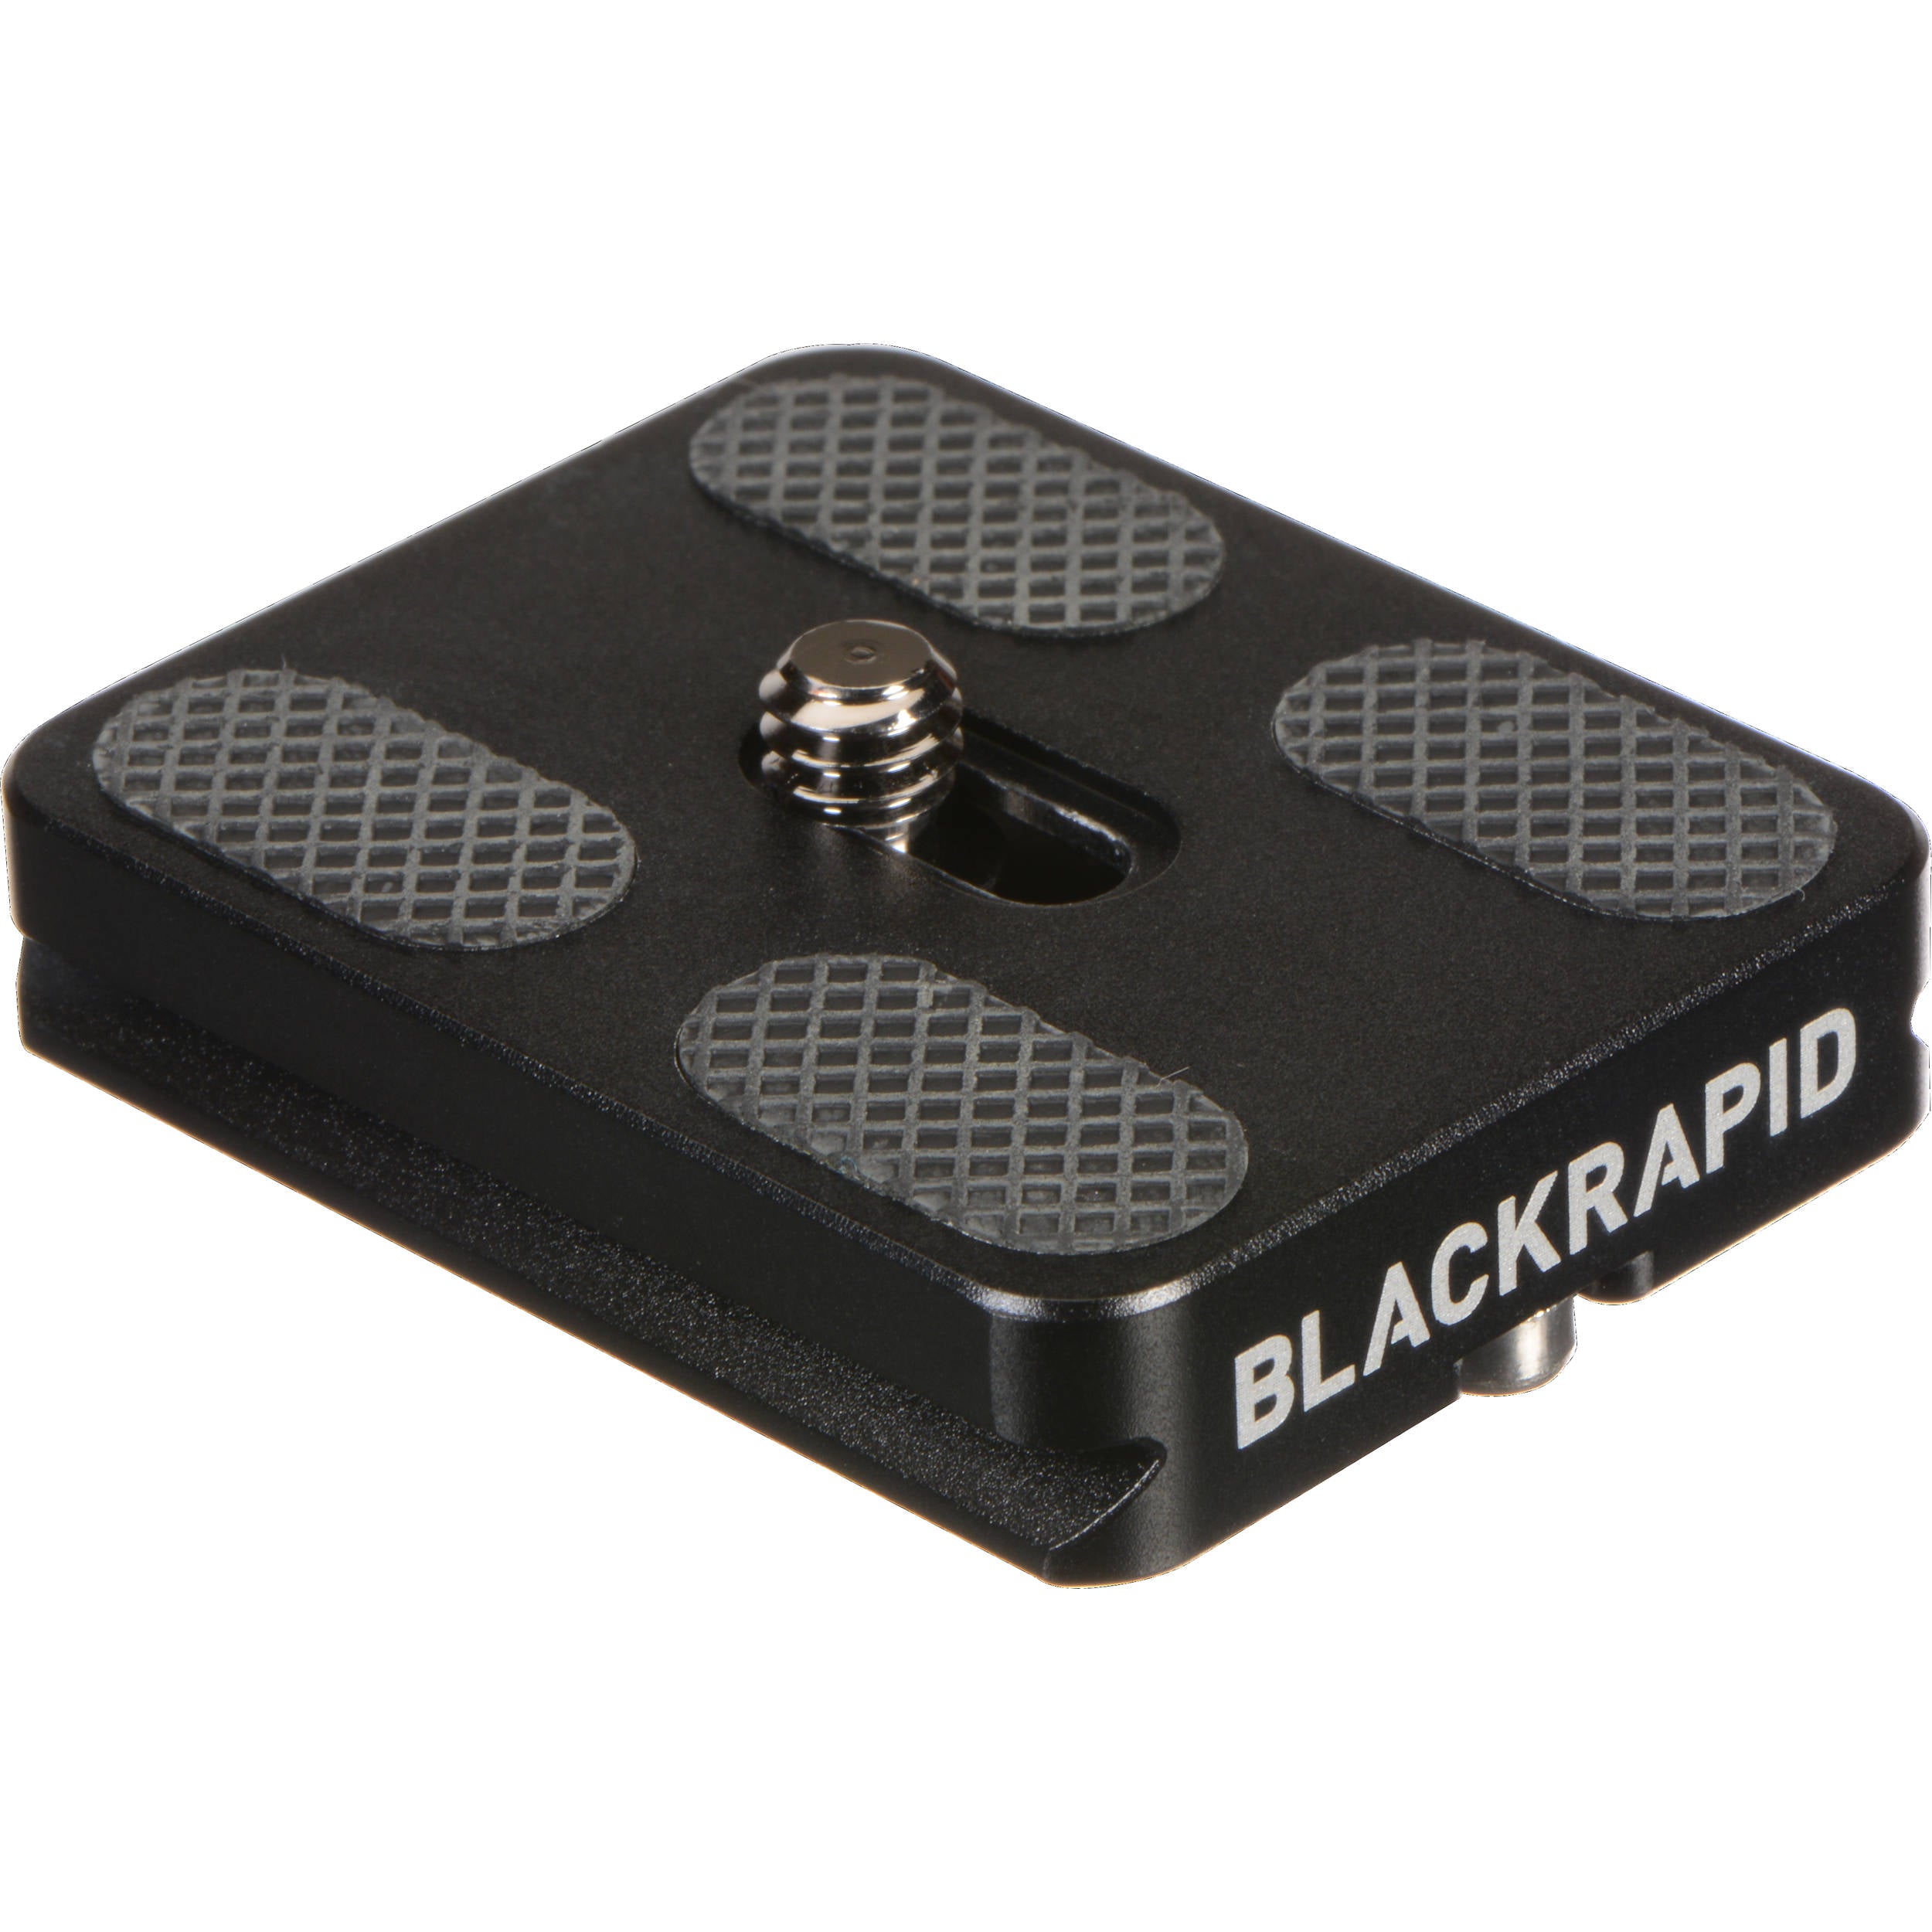 BlackRapid Tripod Plate 50 Quick Release Plate (50mm)